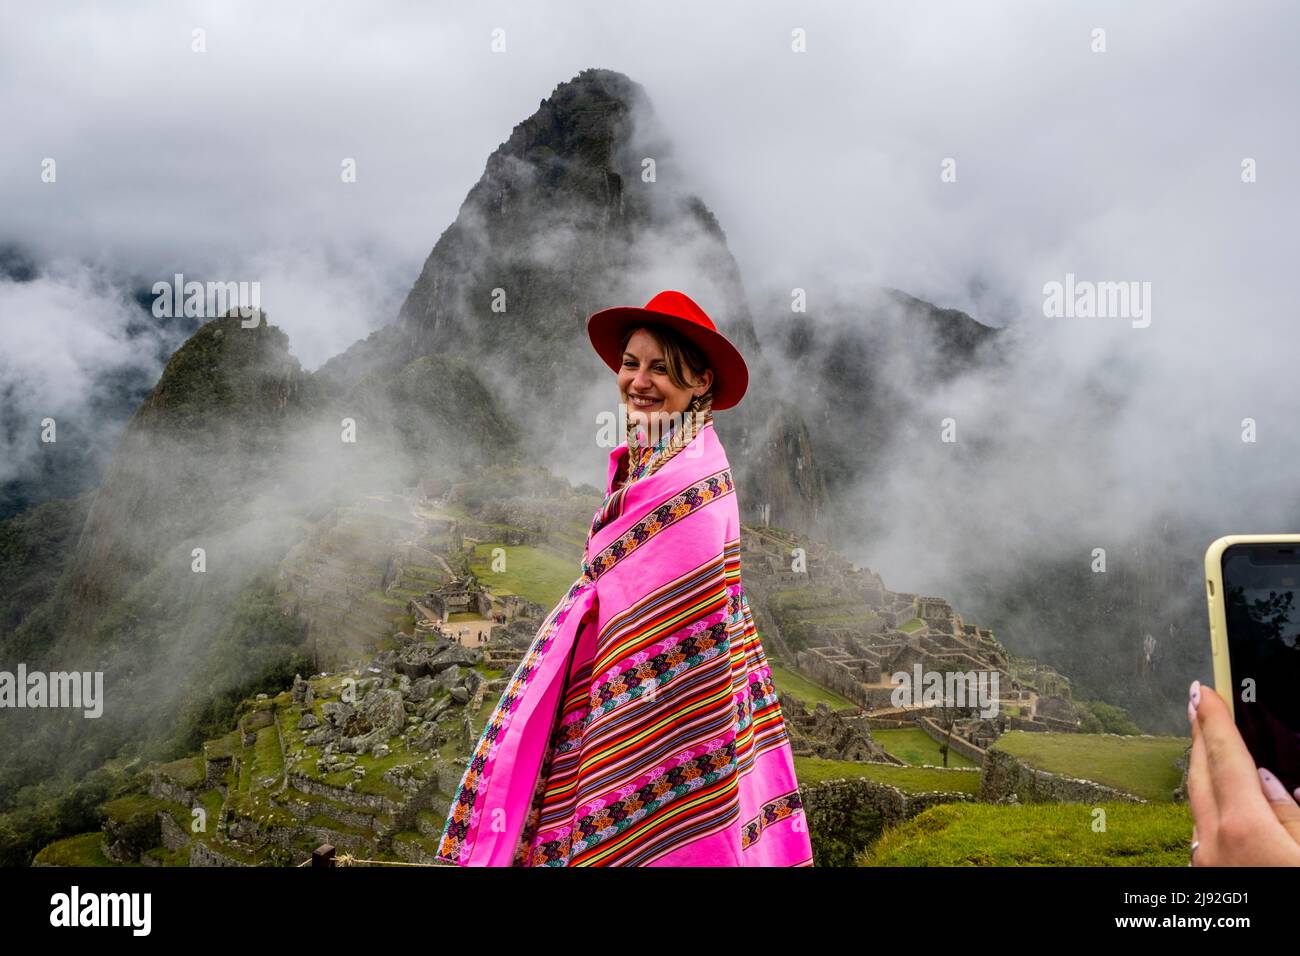 A Young Visitor/Tourist Poses For A Photograph At Machu Picchu, Urubamba Province, Peru. Stock Photo